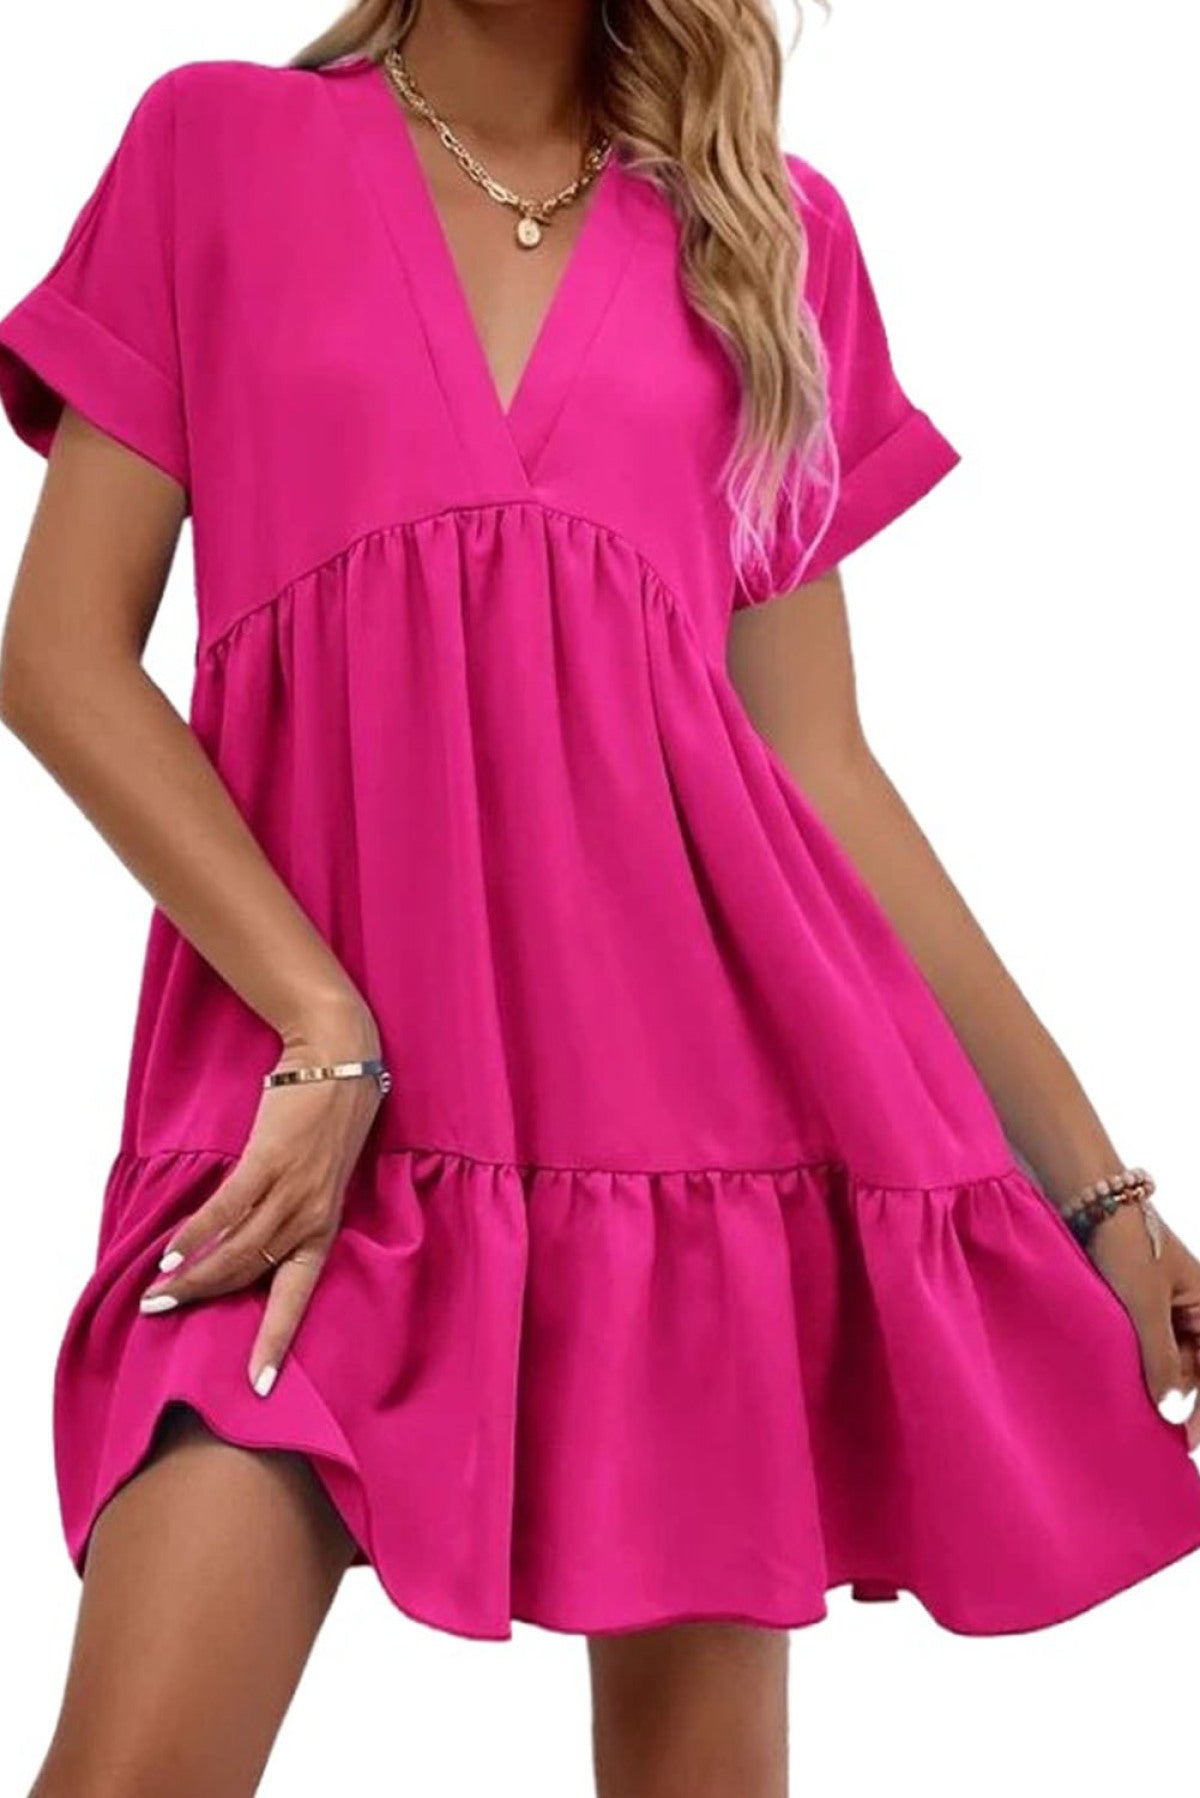 Rose Fresh And Sweet V-Neck Solid Color Large Swing Dress